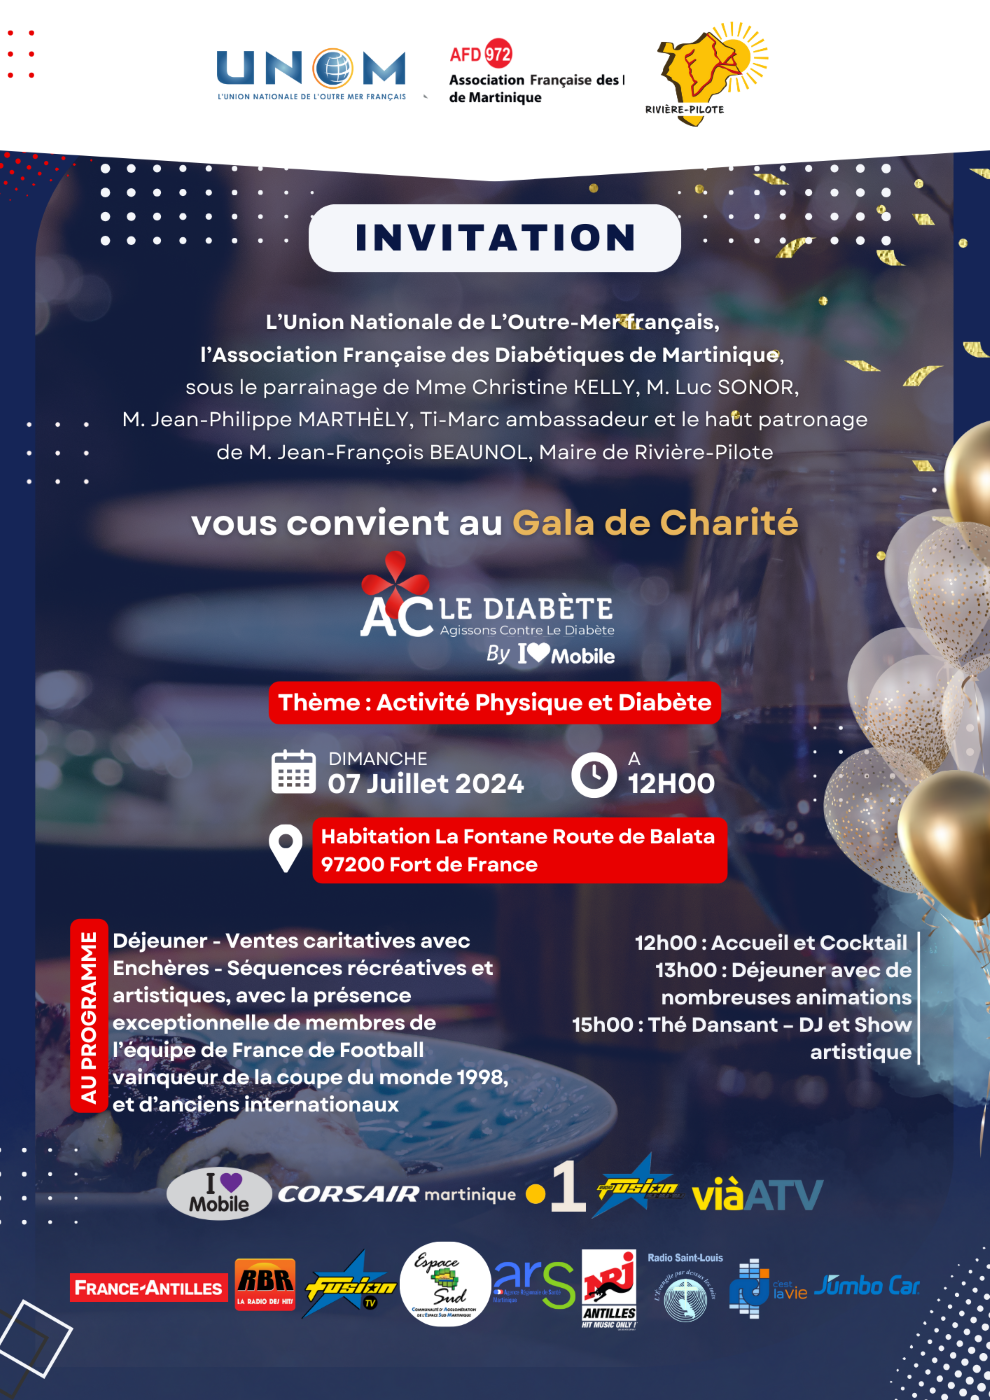 Gala de Charité ACLeDiabète By I Love Mobile_1